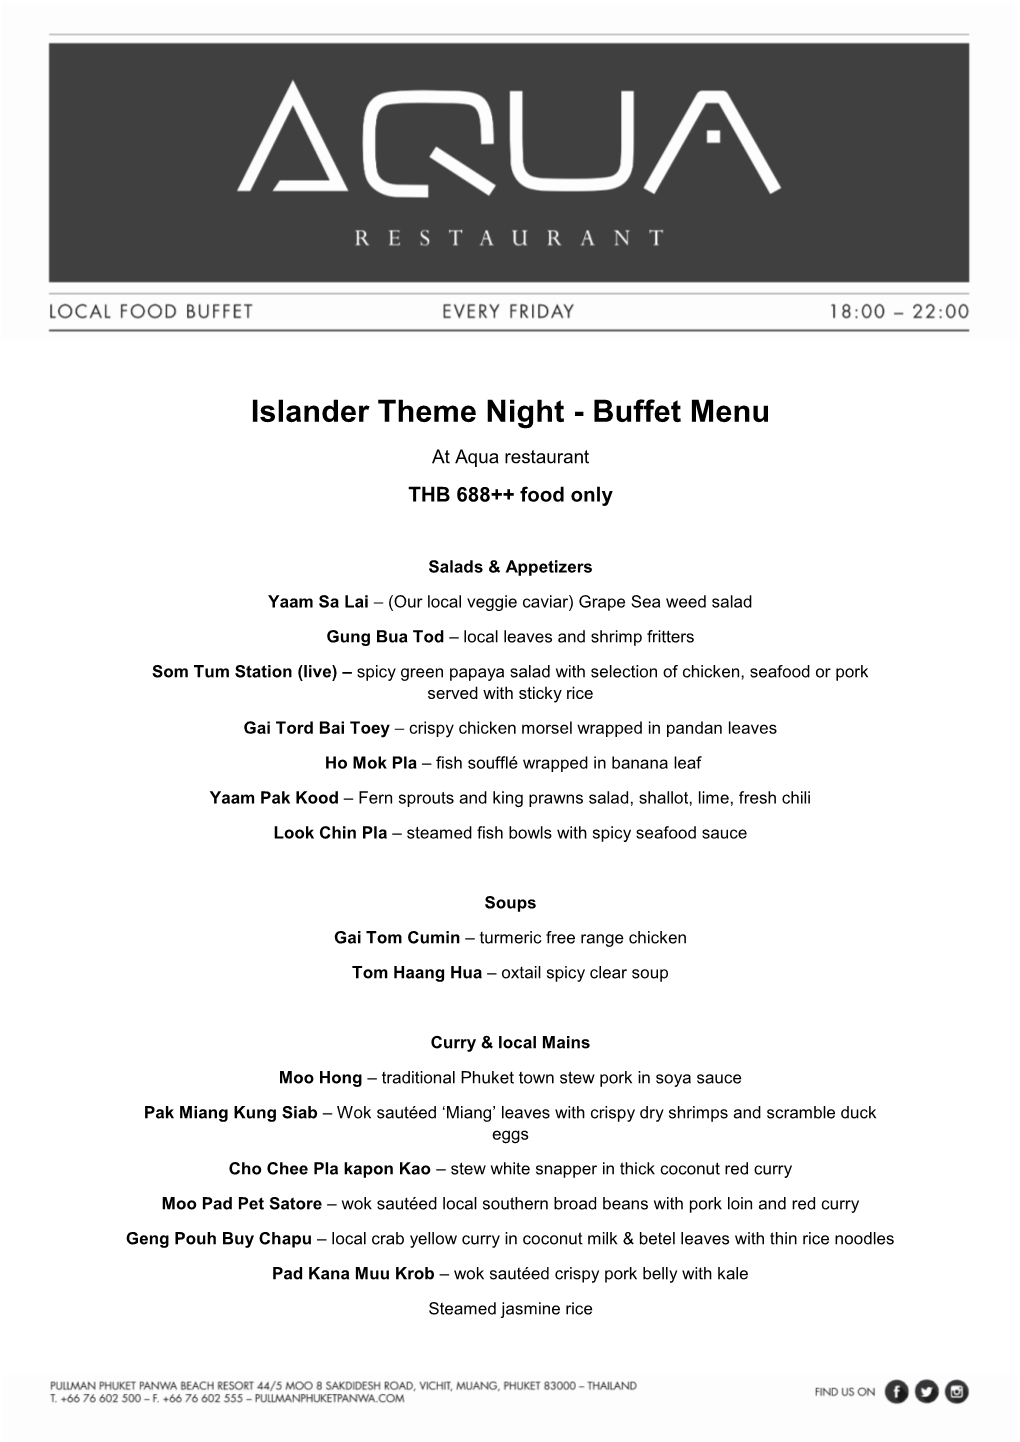 Islander Theme Night - Buffet Menu